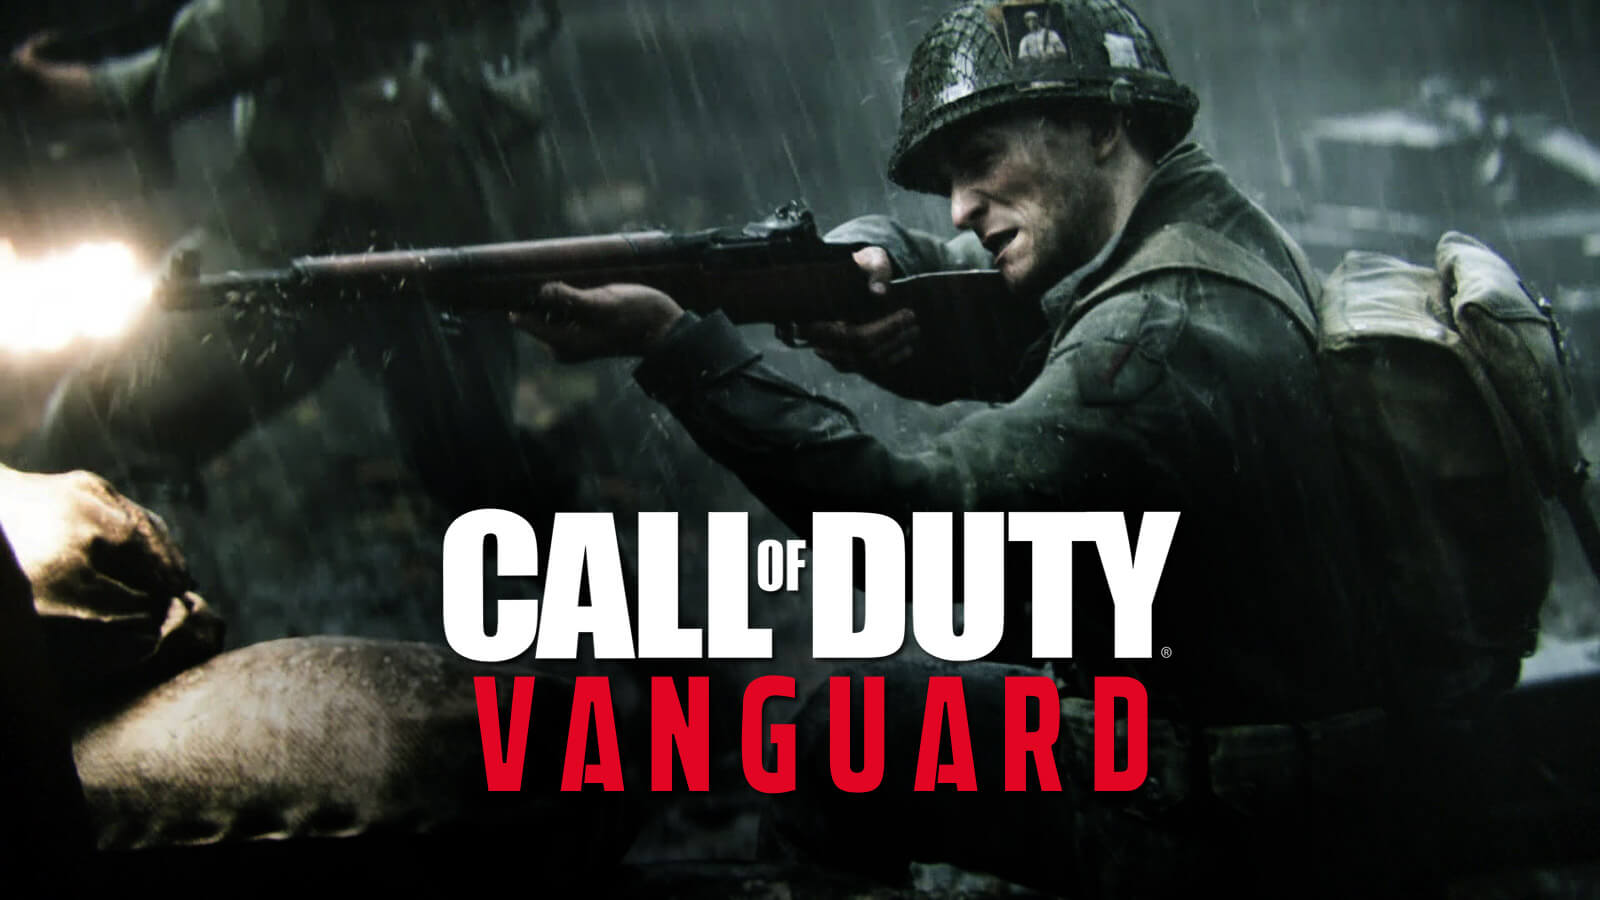 Call of Duty: Vanguard Image Leaked Ahead of Reveal